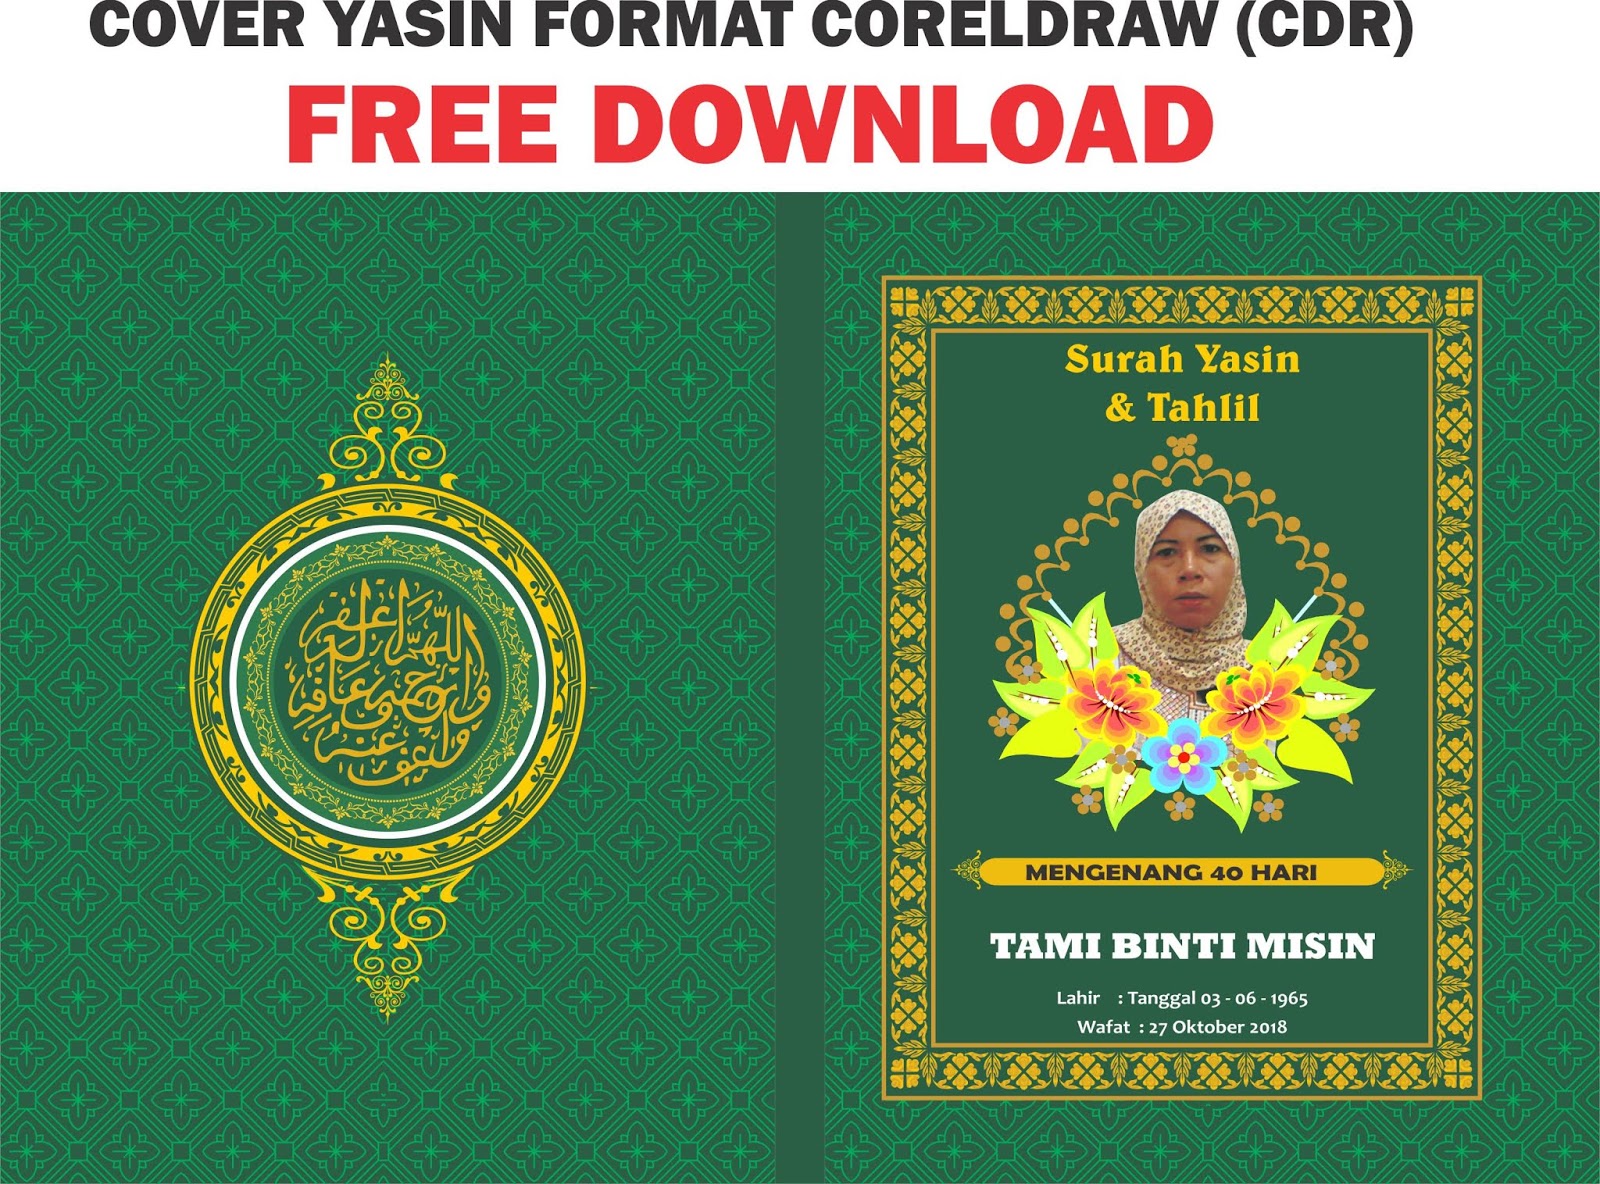 Download Cover Yasin Cdr X4 Gratis